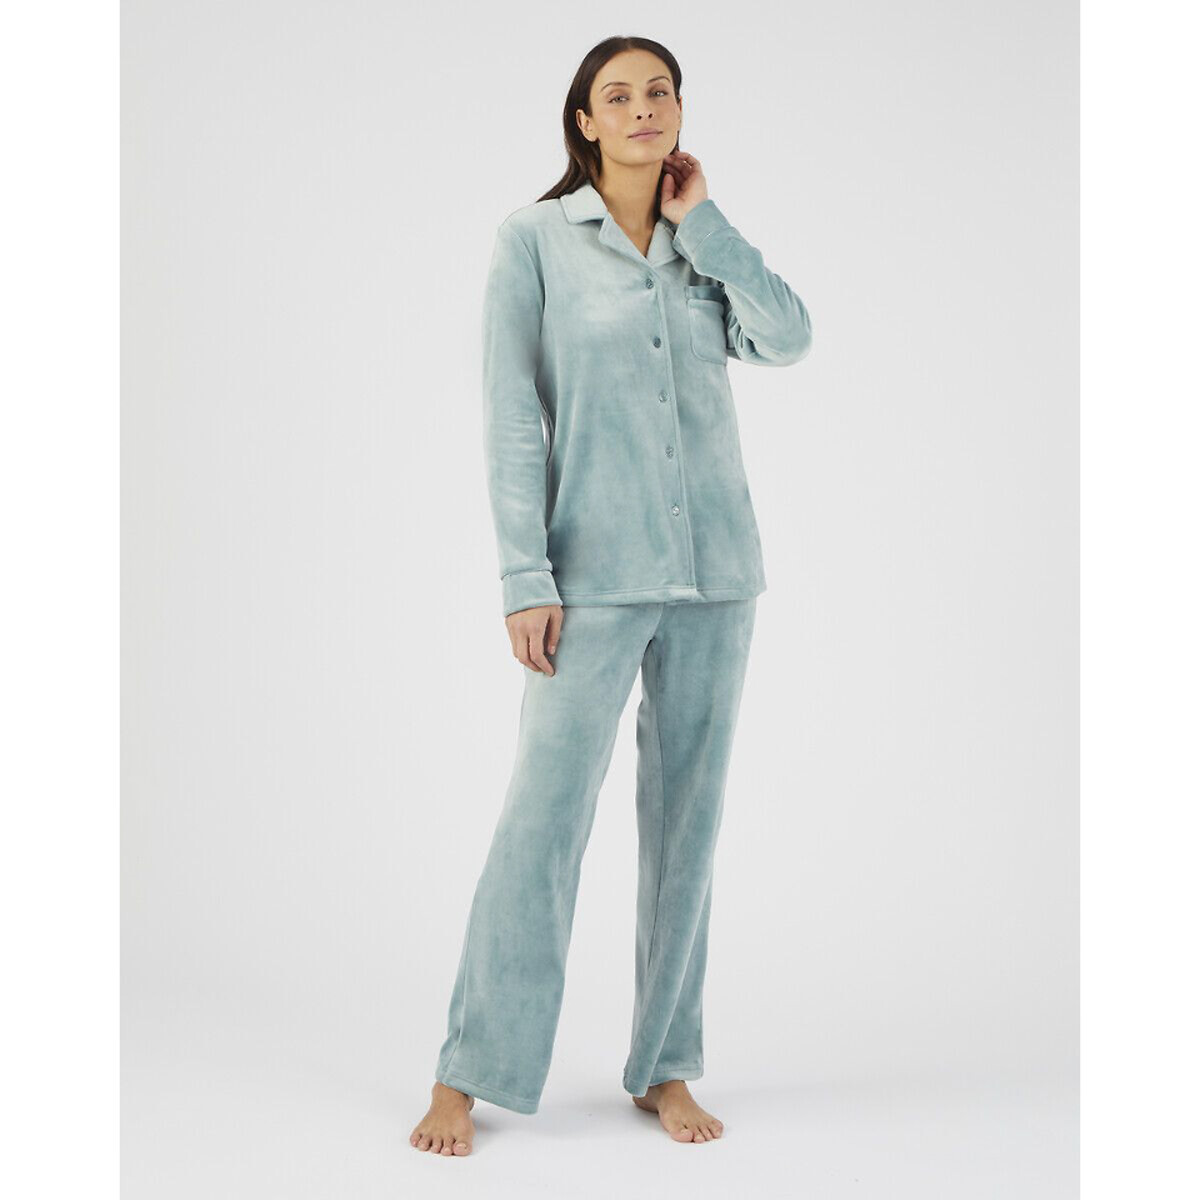 Комплект пижамный из термолактила La Redoute XS синий комплект пижамный домашний la redoute xxl белый